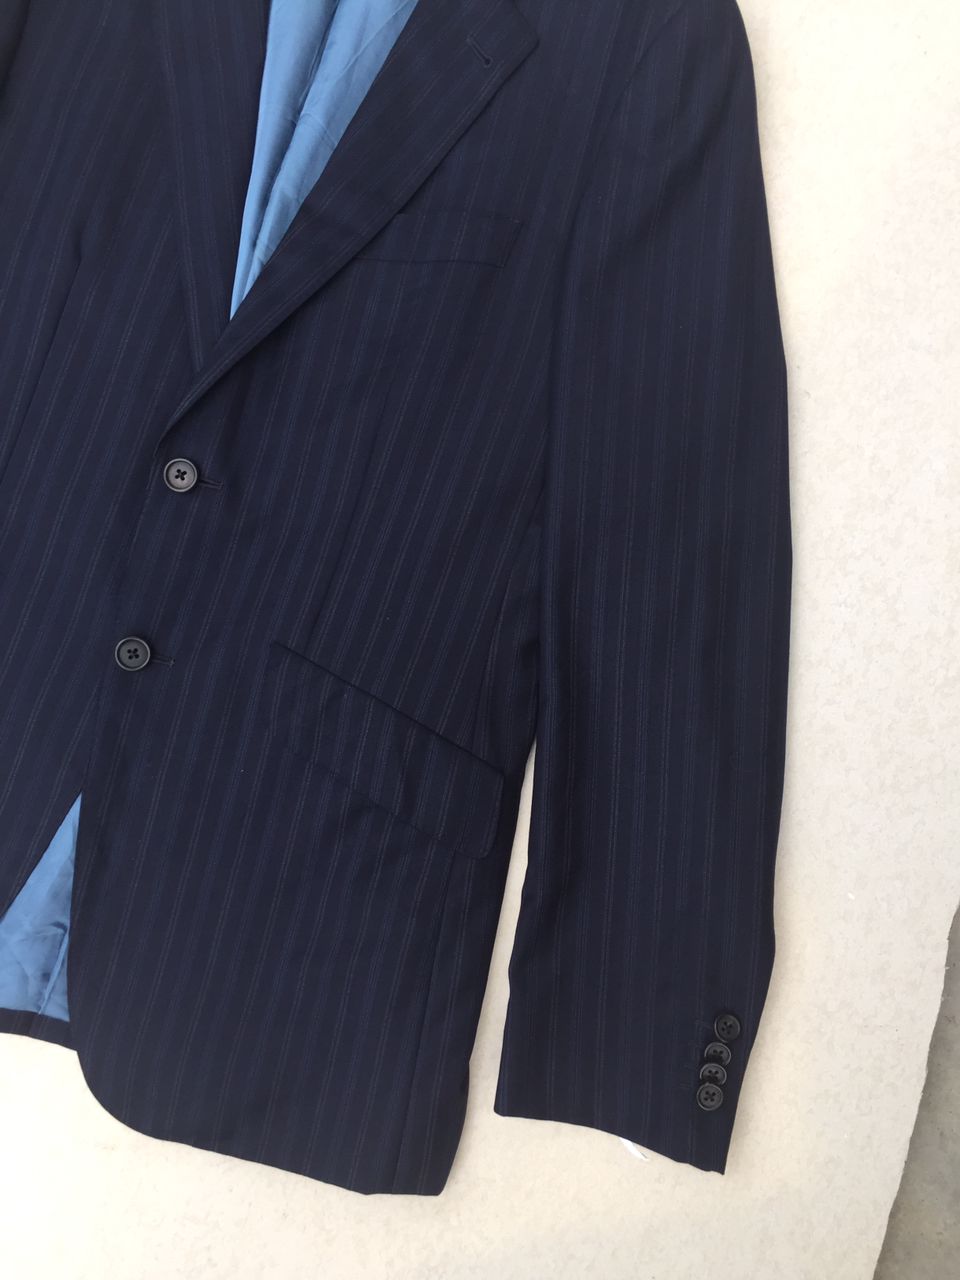 Paul Smith Loro Piana Blazer Suit stripe navy - 5